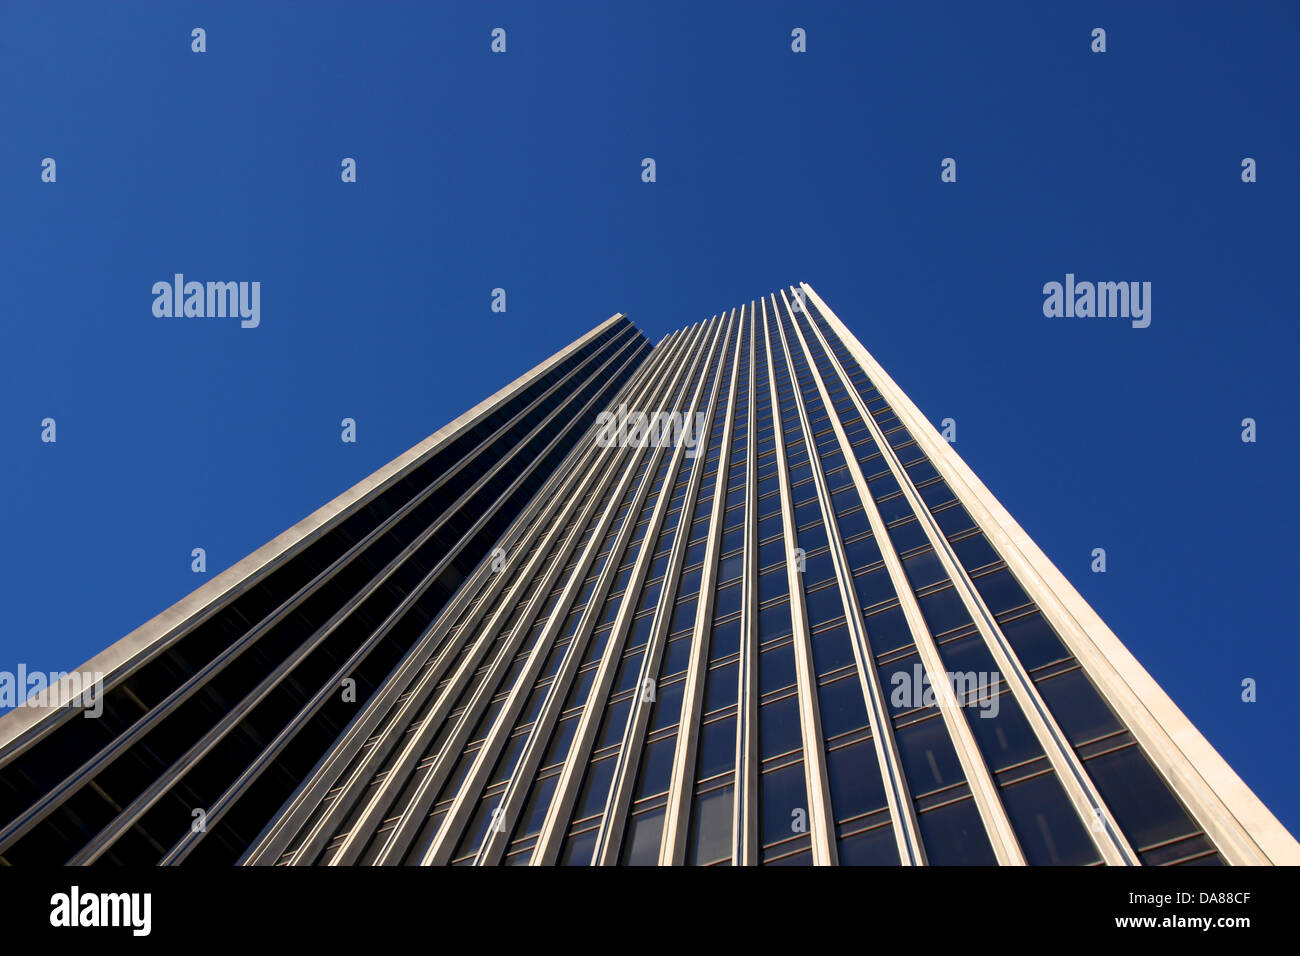 Zeigen Sie an, Erastus Corning Tower in Albany, NY, USA. Stockfoto